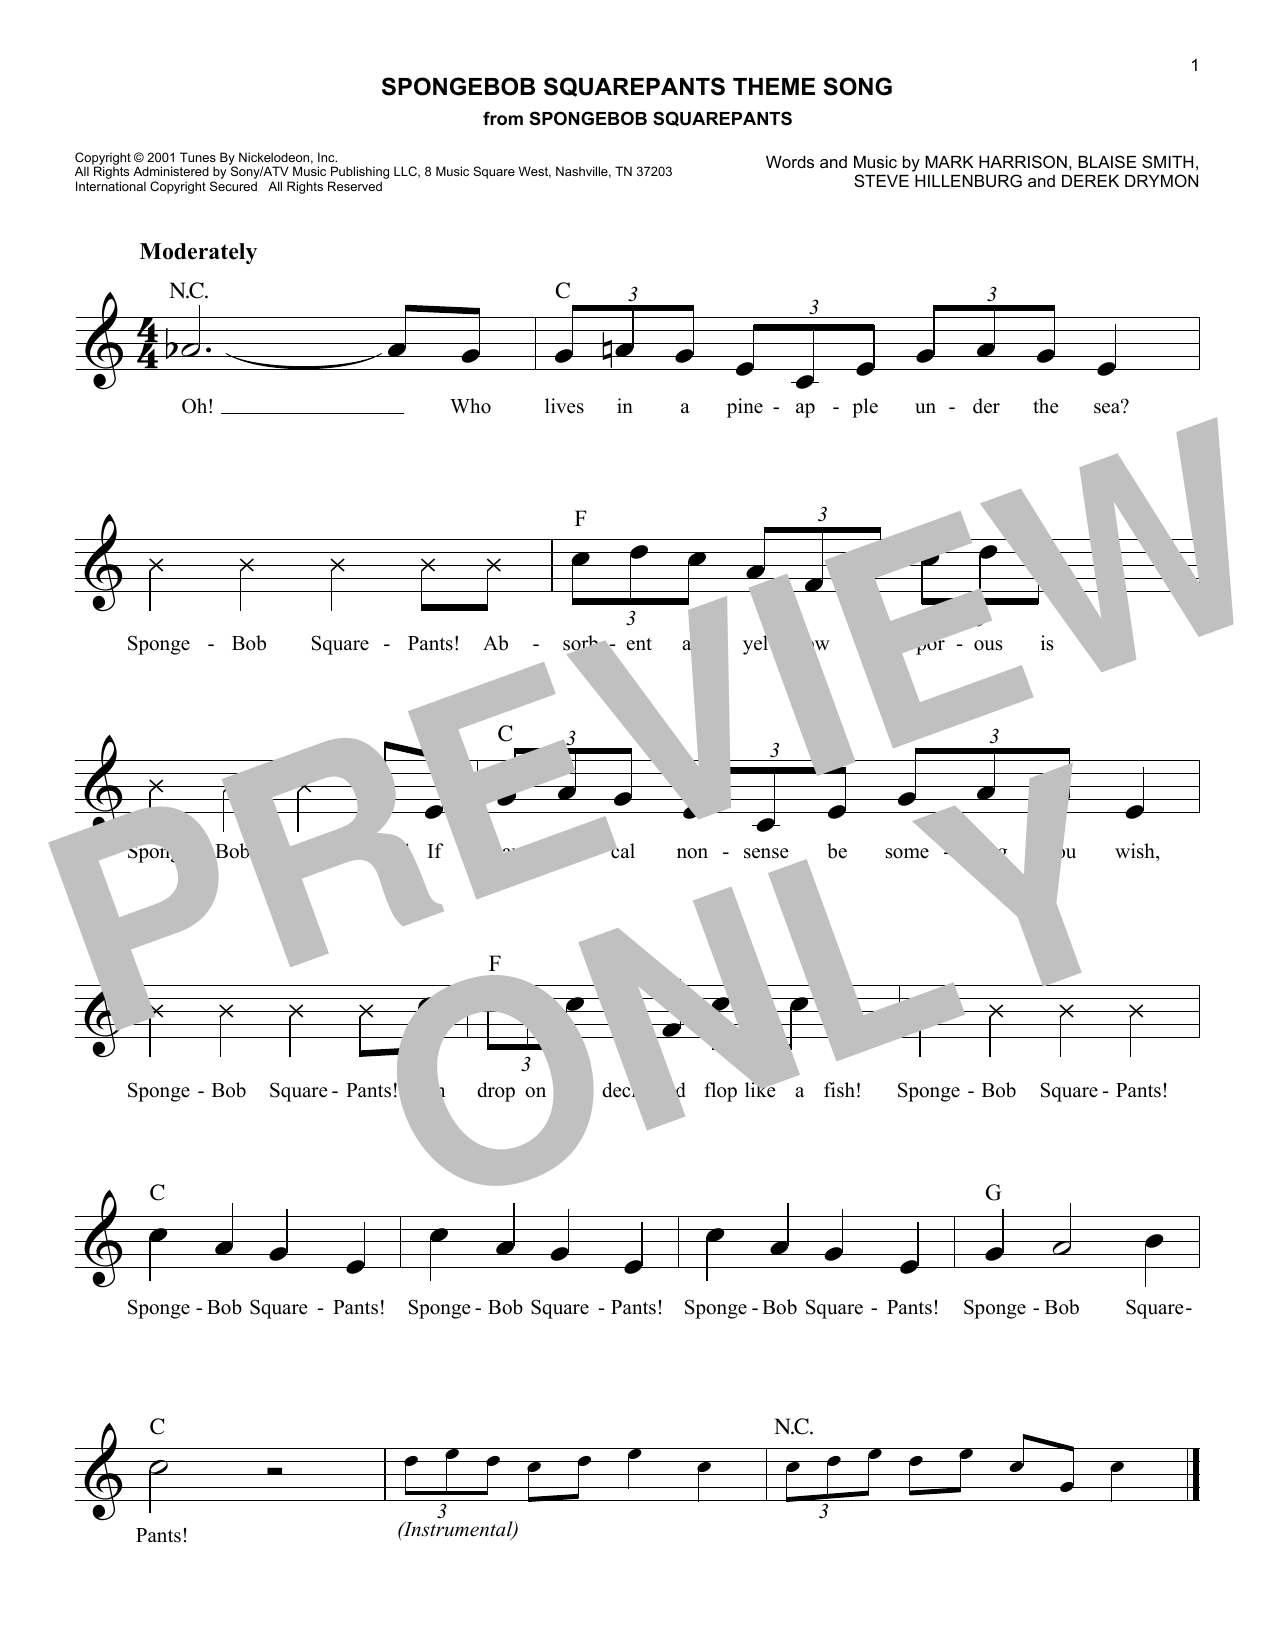 Steve Hillenburg SpongeBob SquarePants Theme Song sheet music notes and chords arranged for 5-Finger Piano